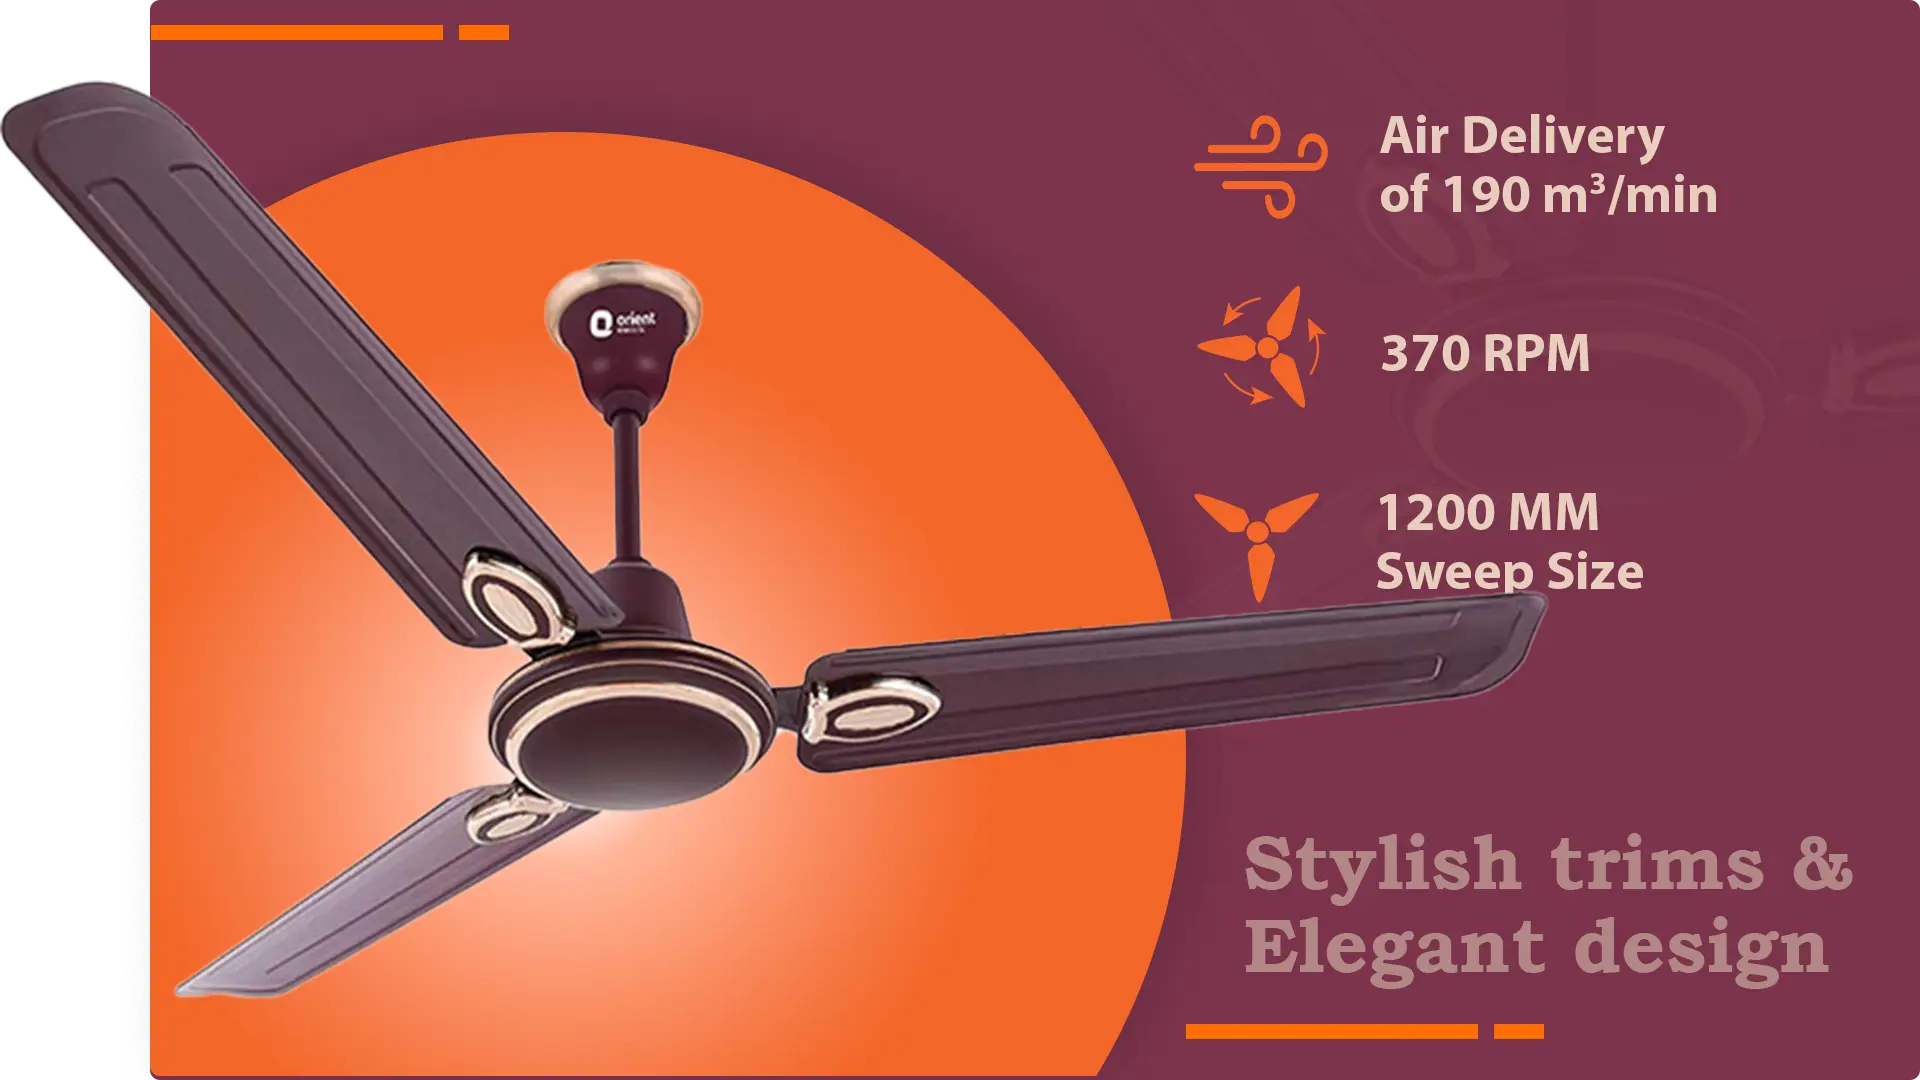 Orient Electric Pacific Air Decor 1200mm Decorative Ceiling Fan Review